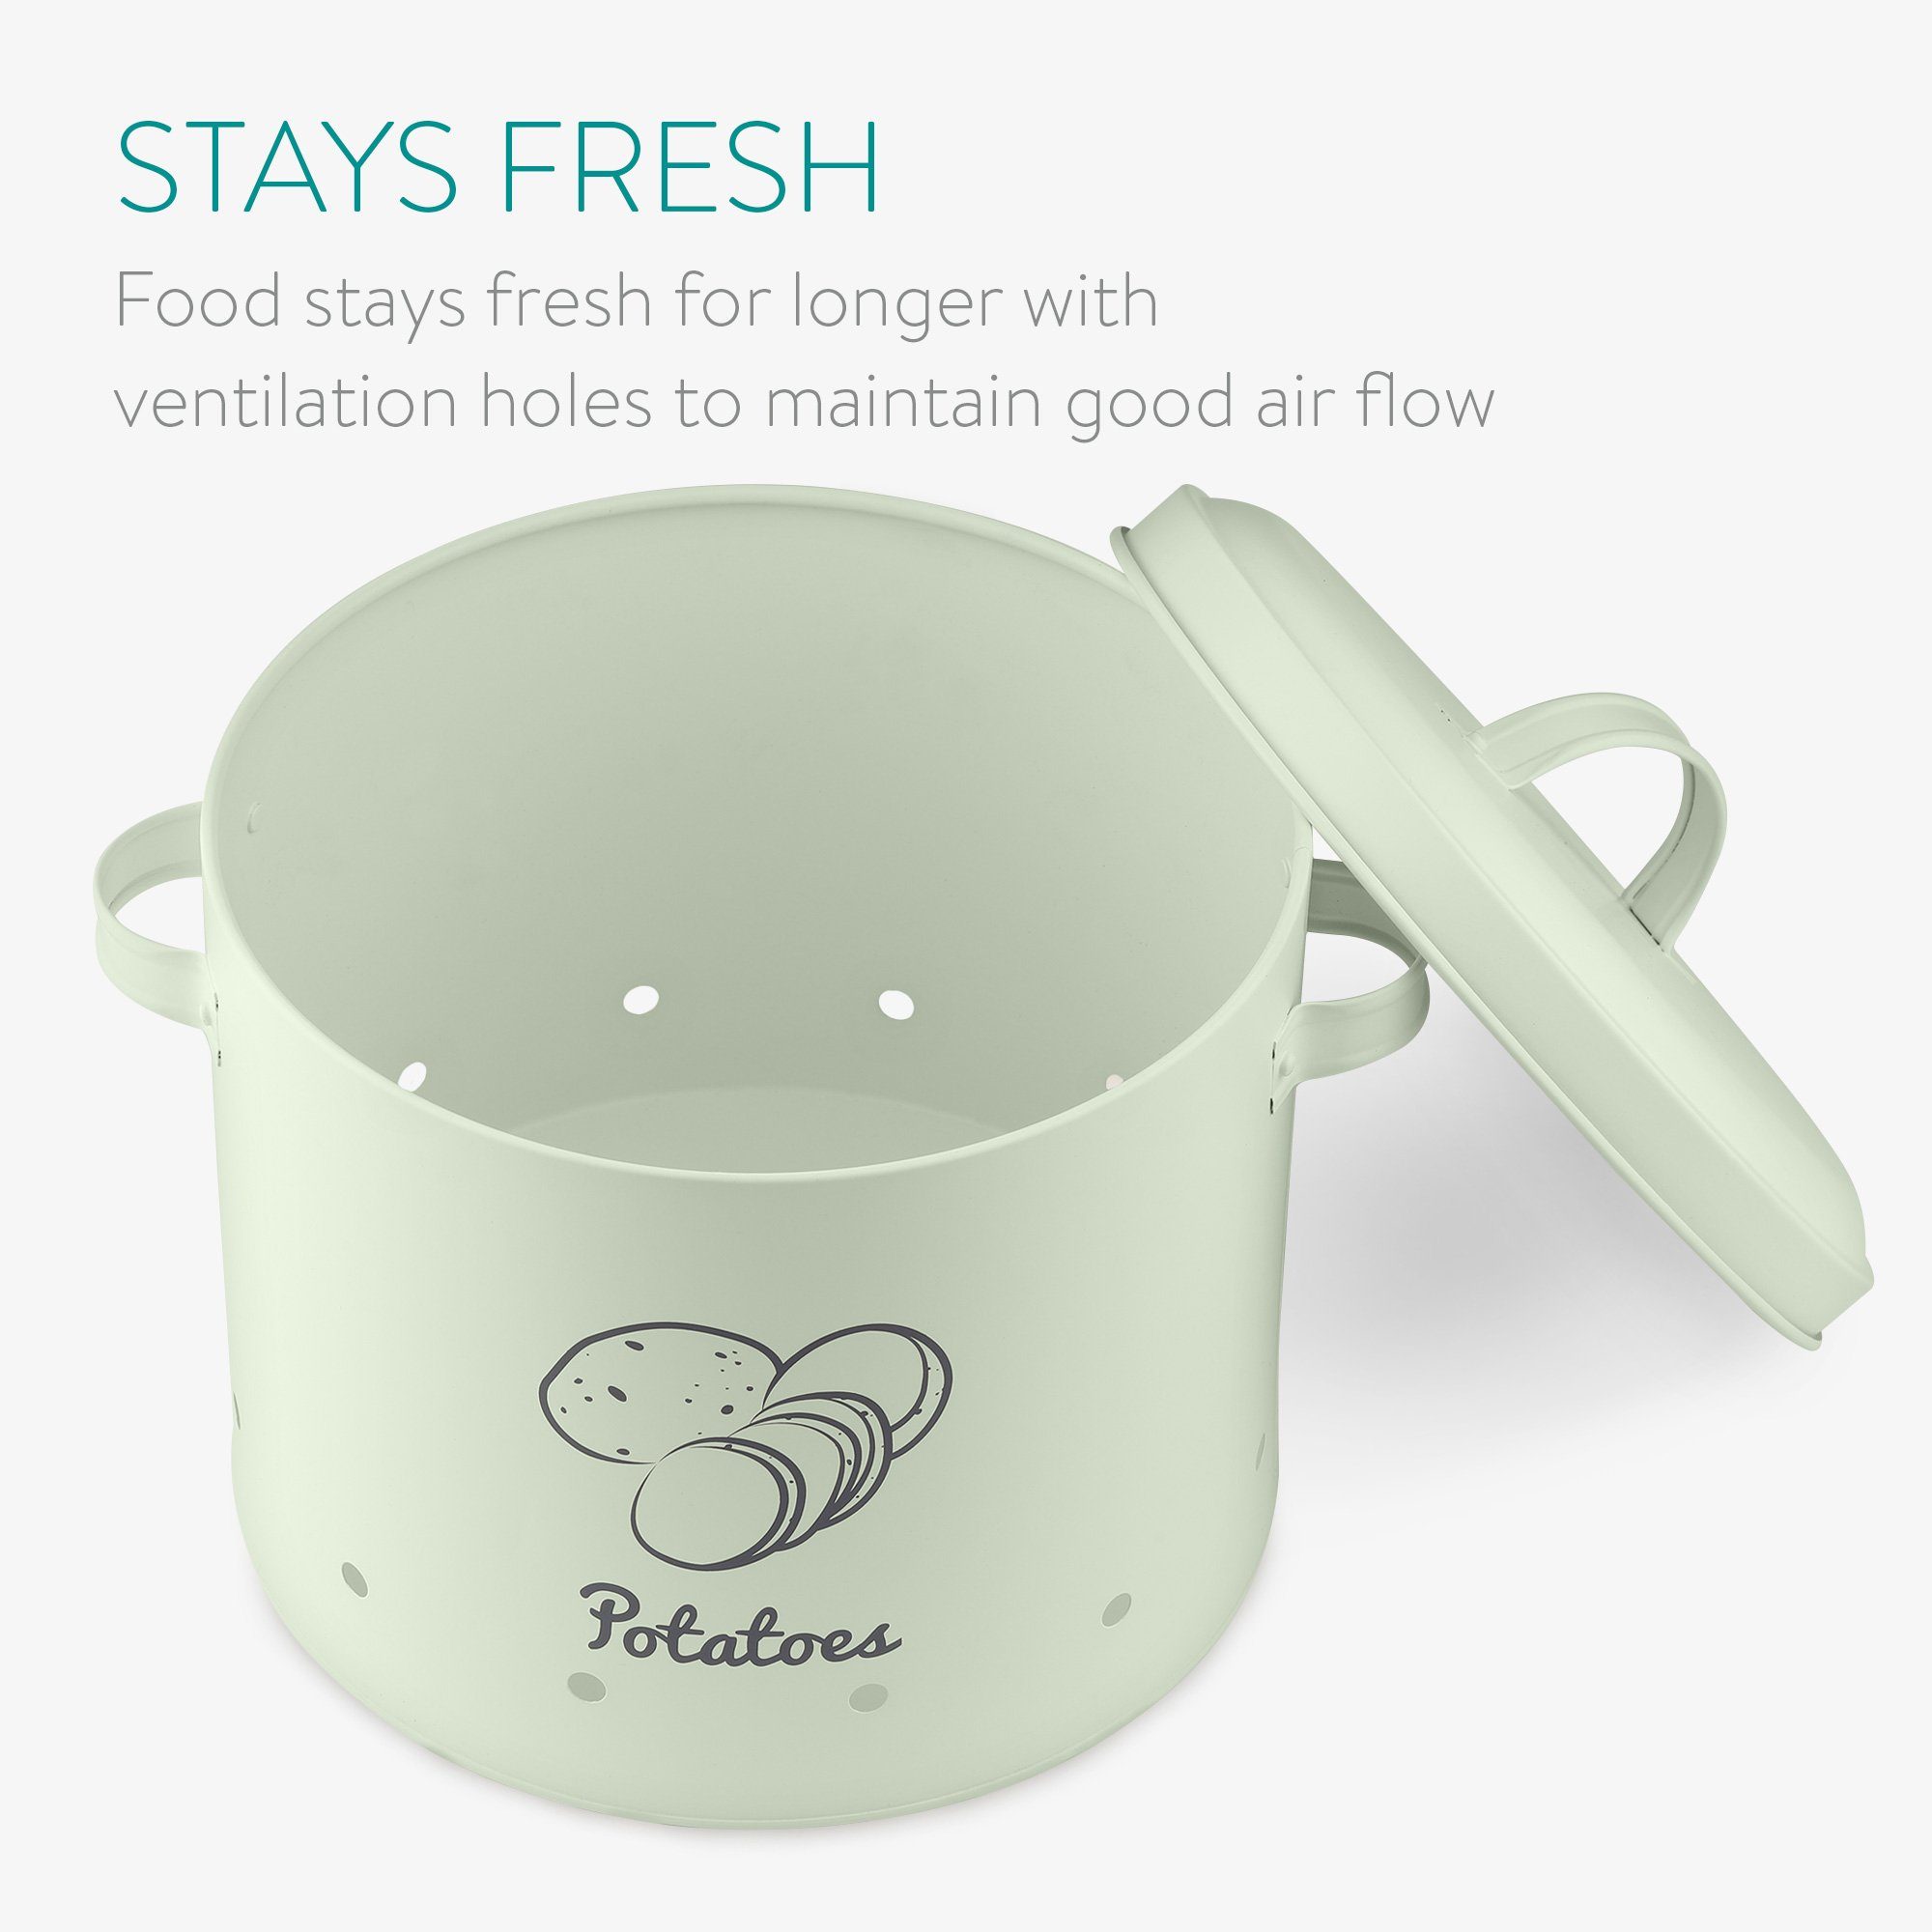 Navaris Gemüsetopf Vorratsbehälter Set für Lebensmittel spülmaschinenfest Eisen - Mintgrün 